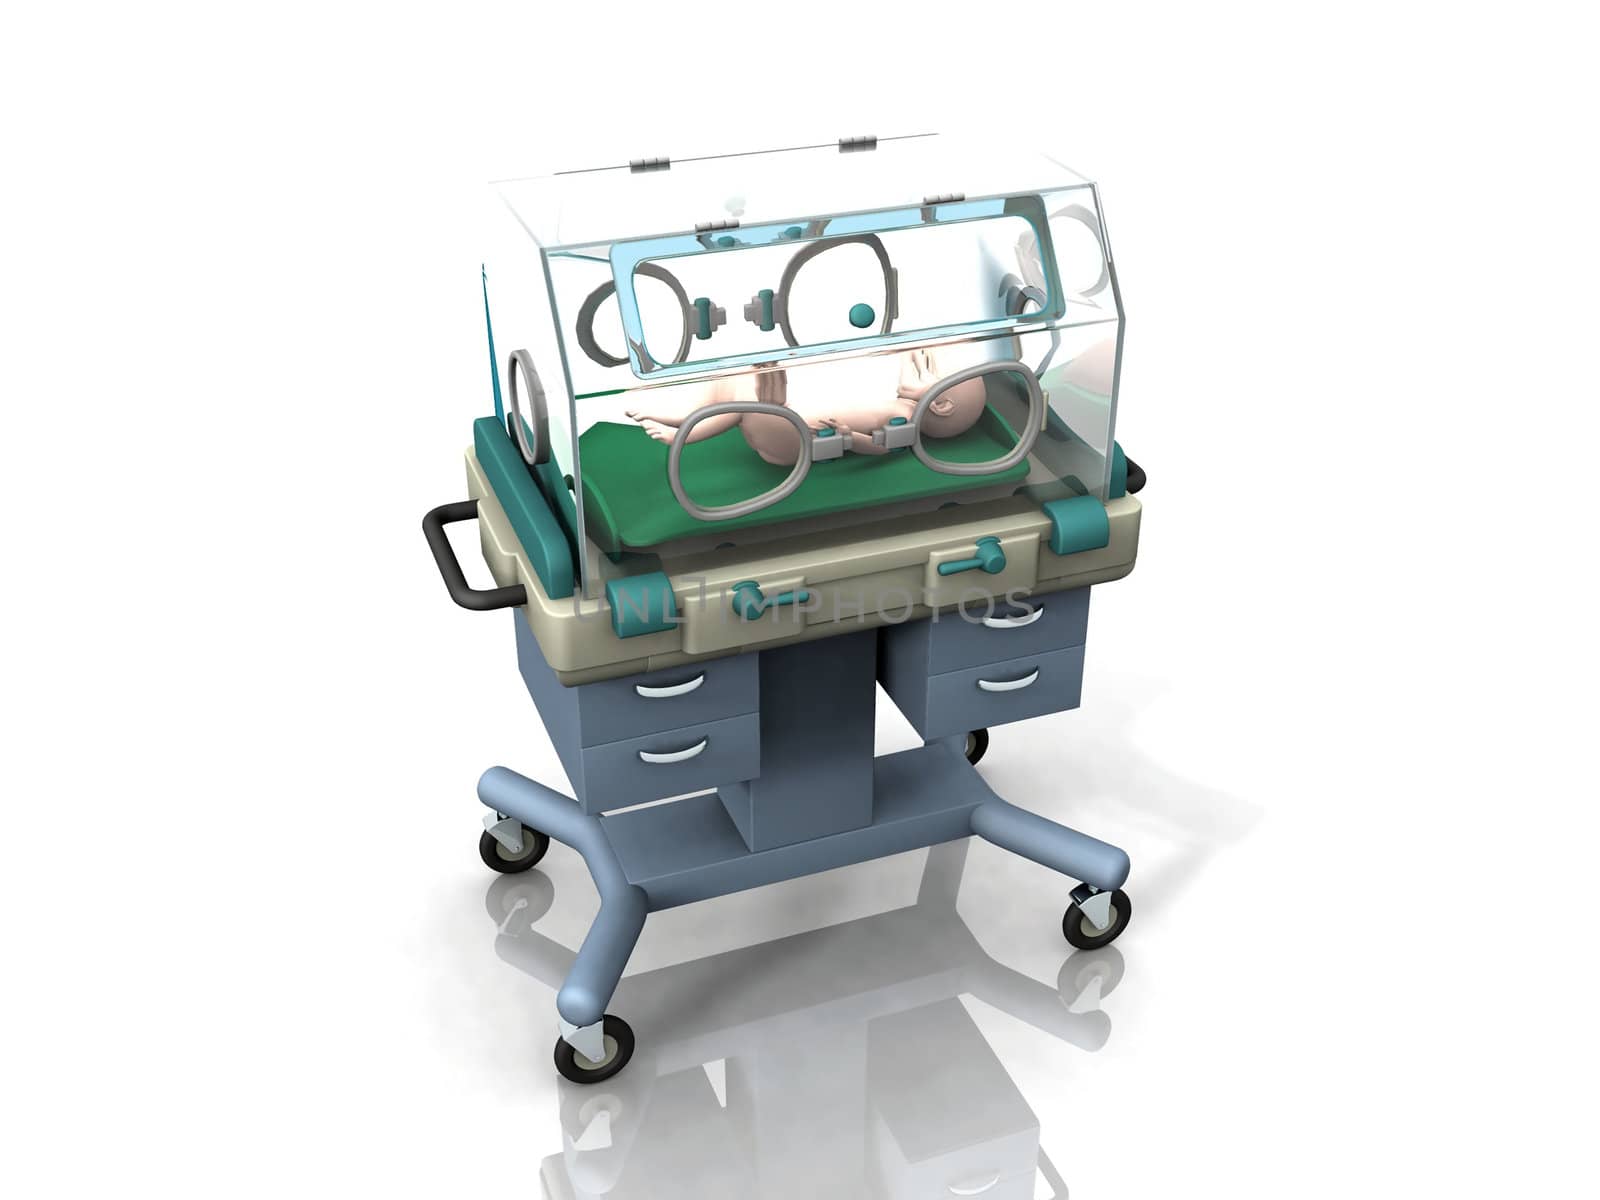 the baby incubator by njaj